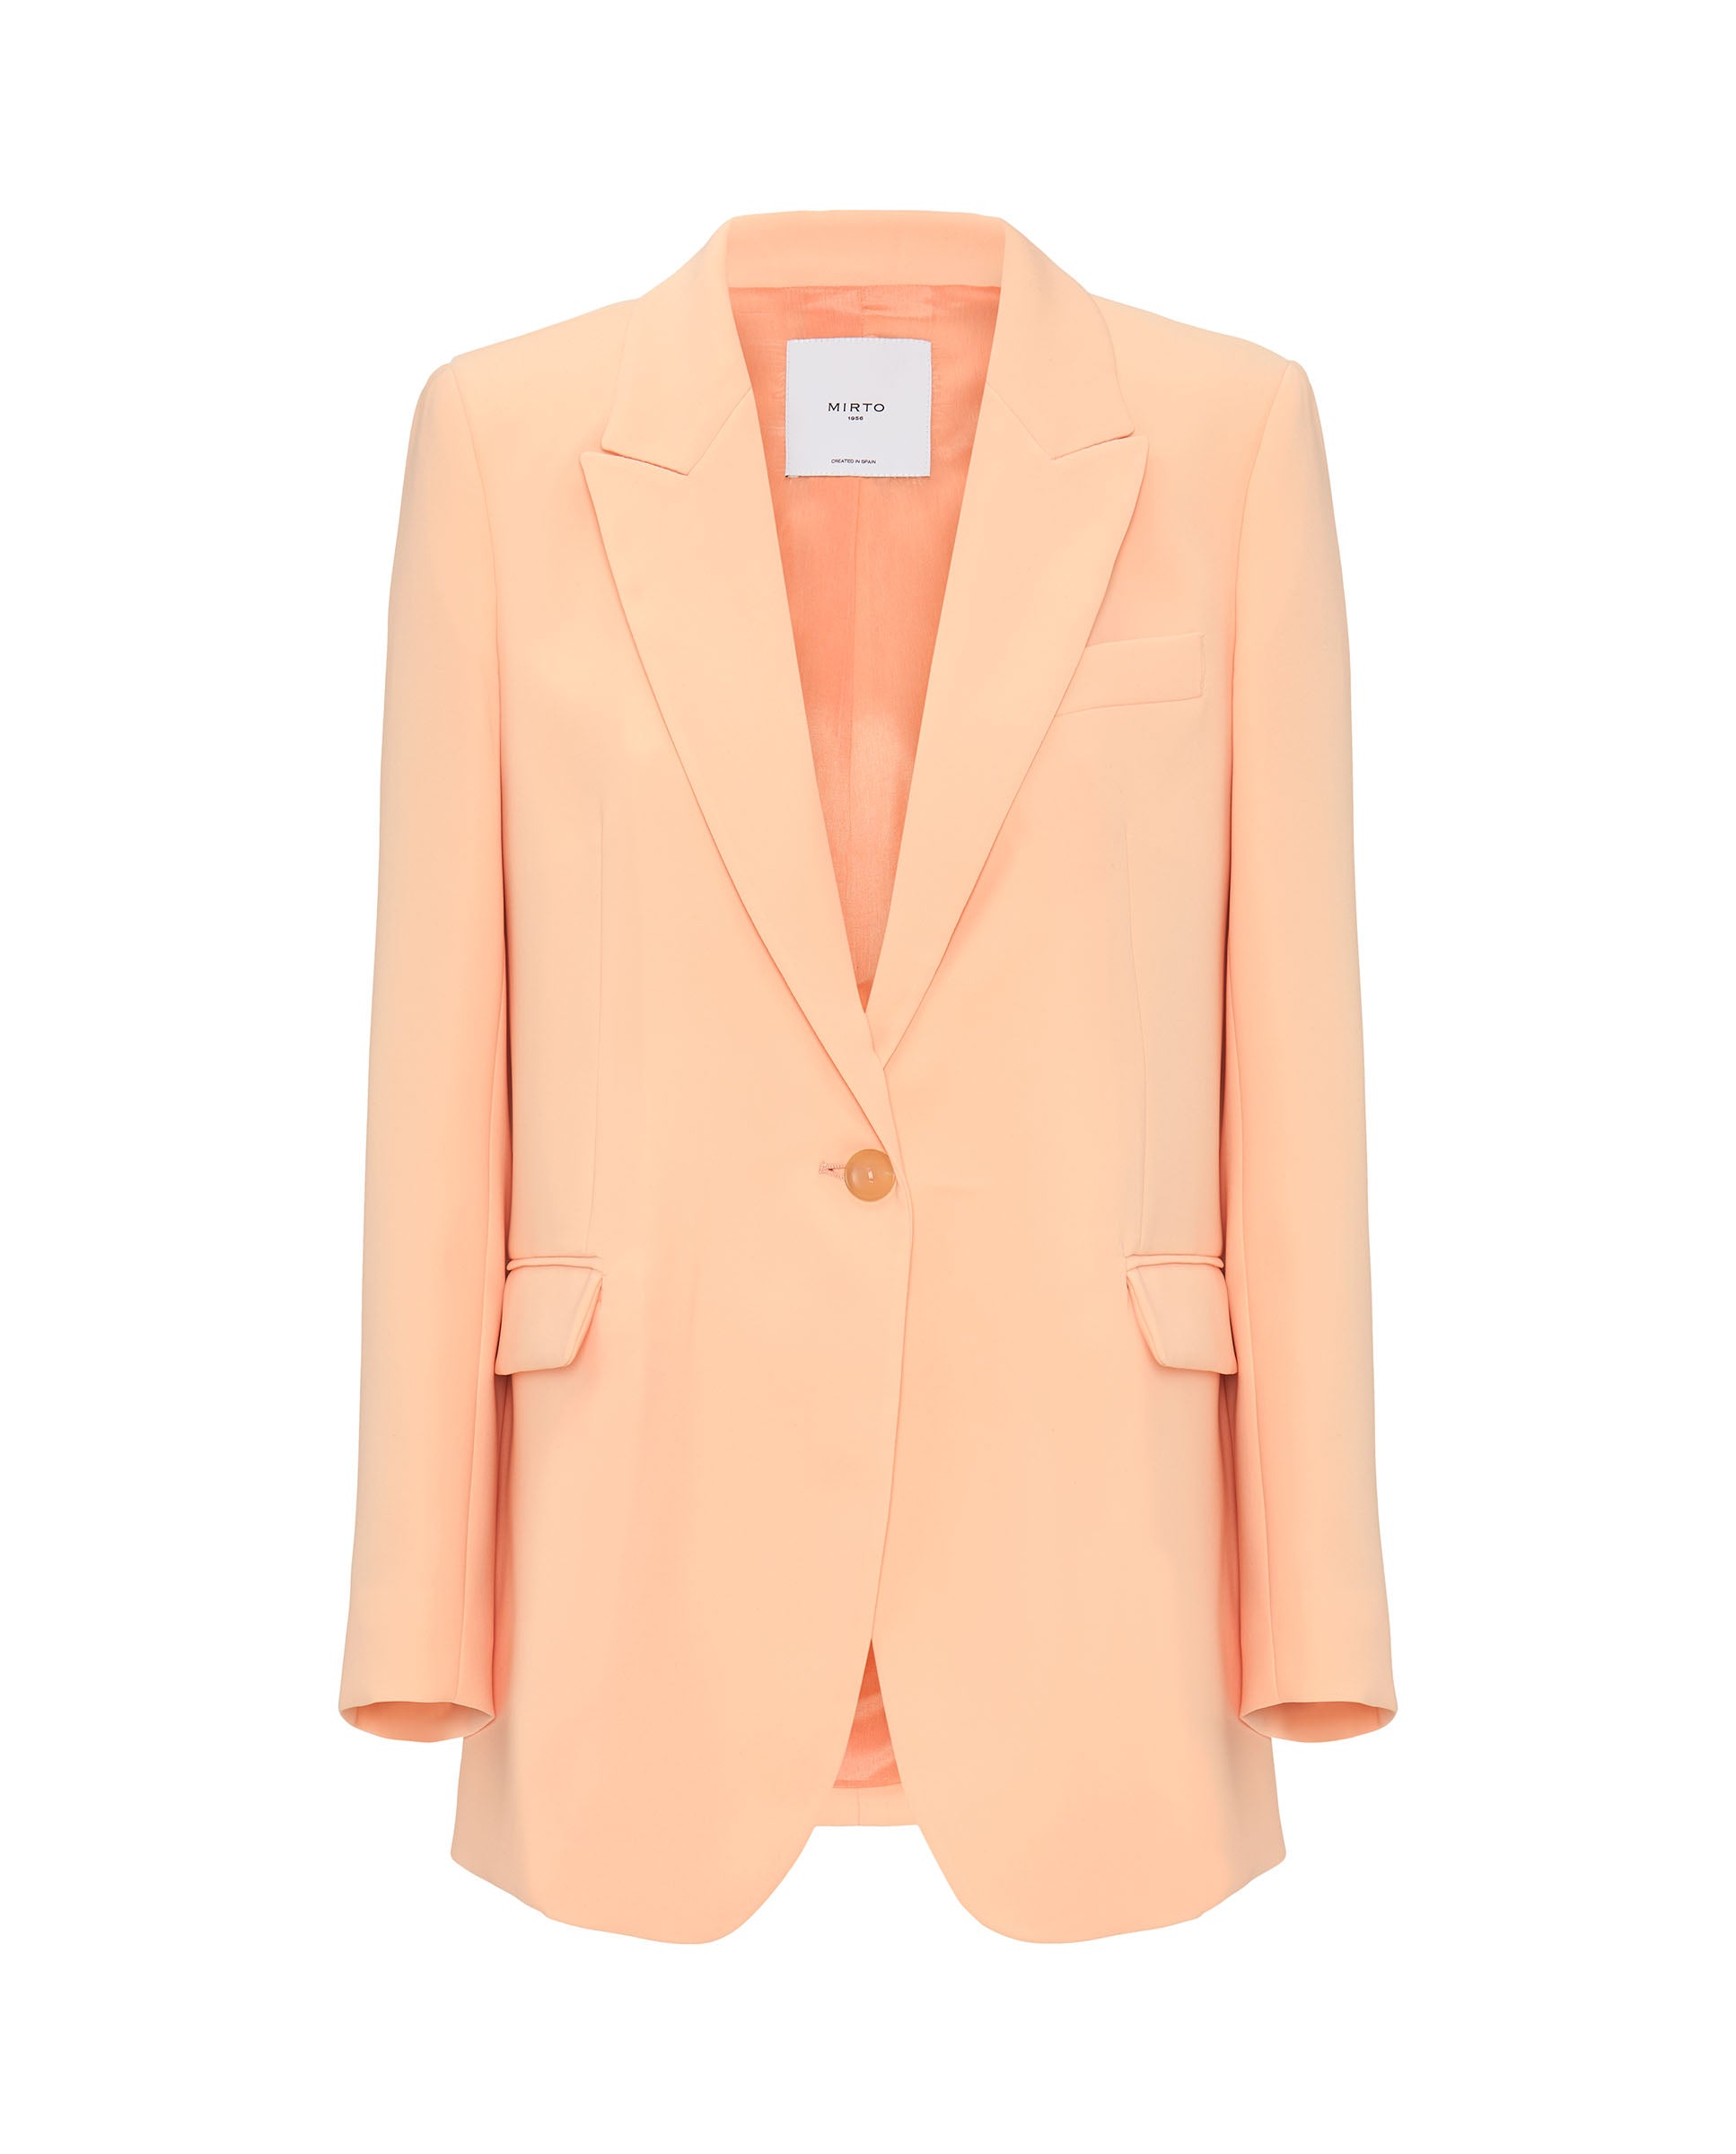 Peach orange fluid sartorial jacket by MIRTO